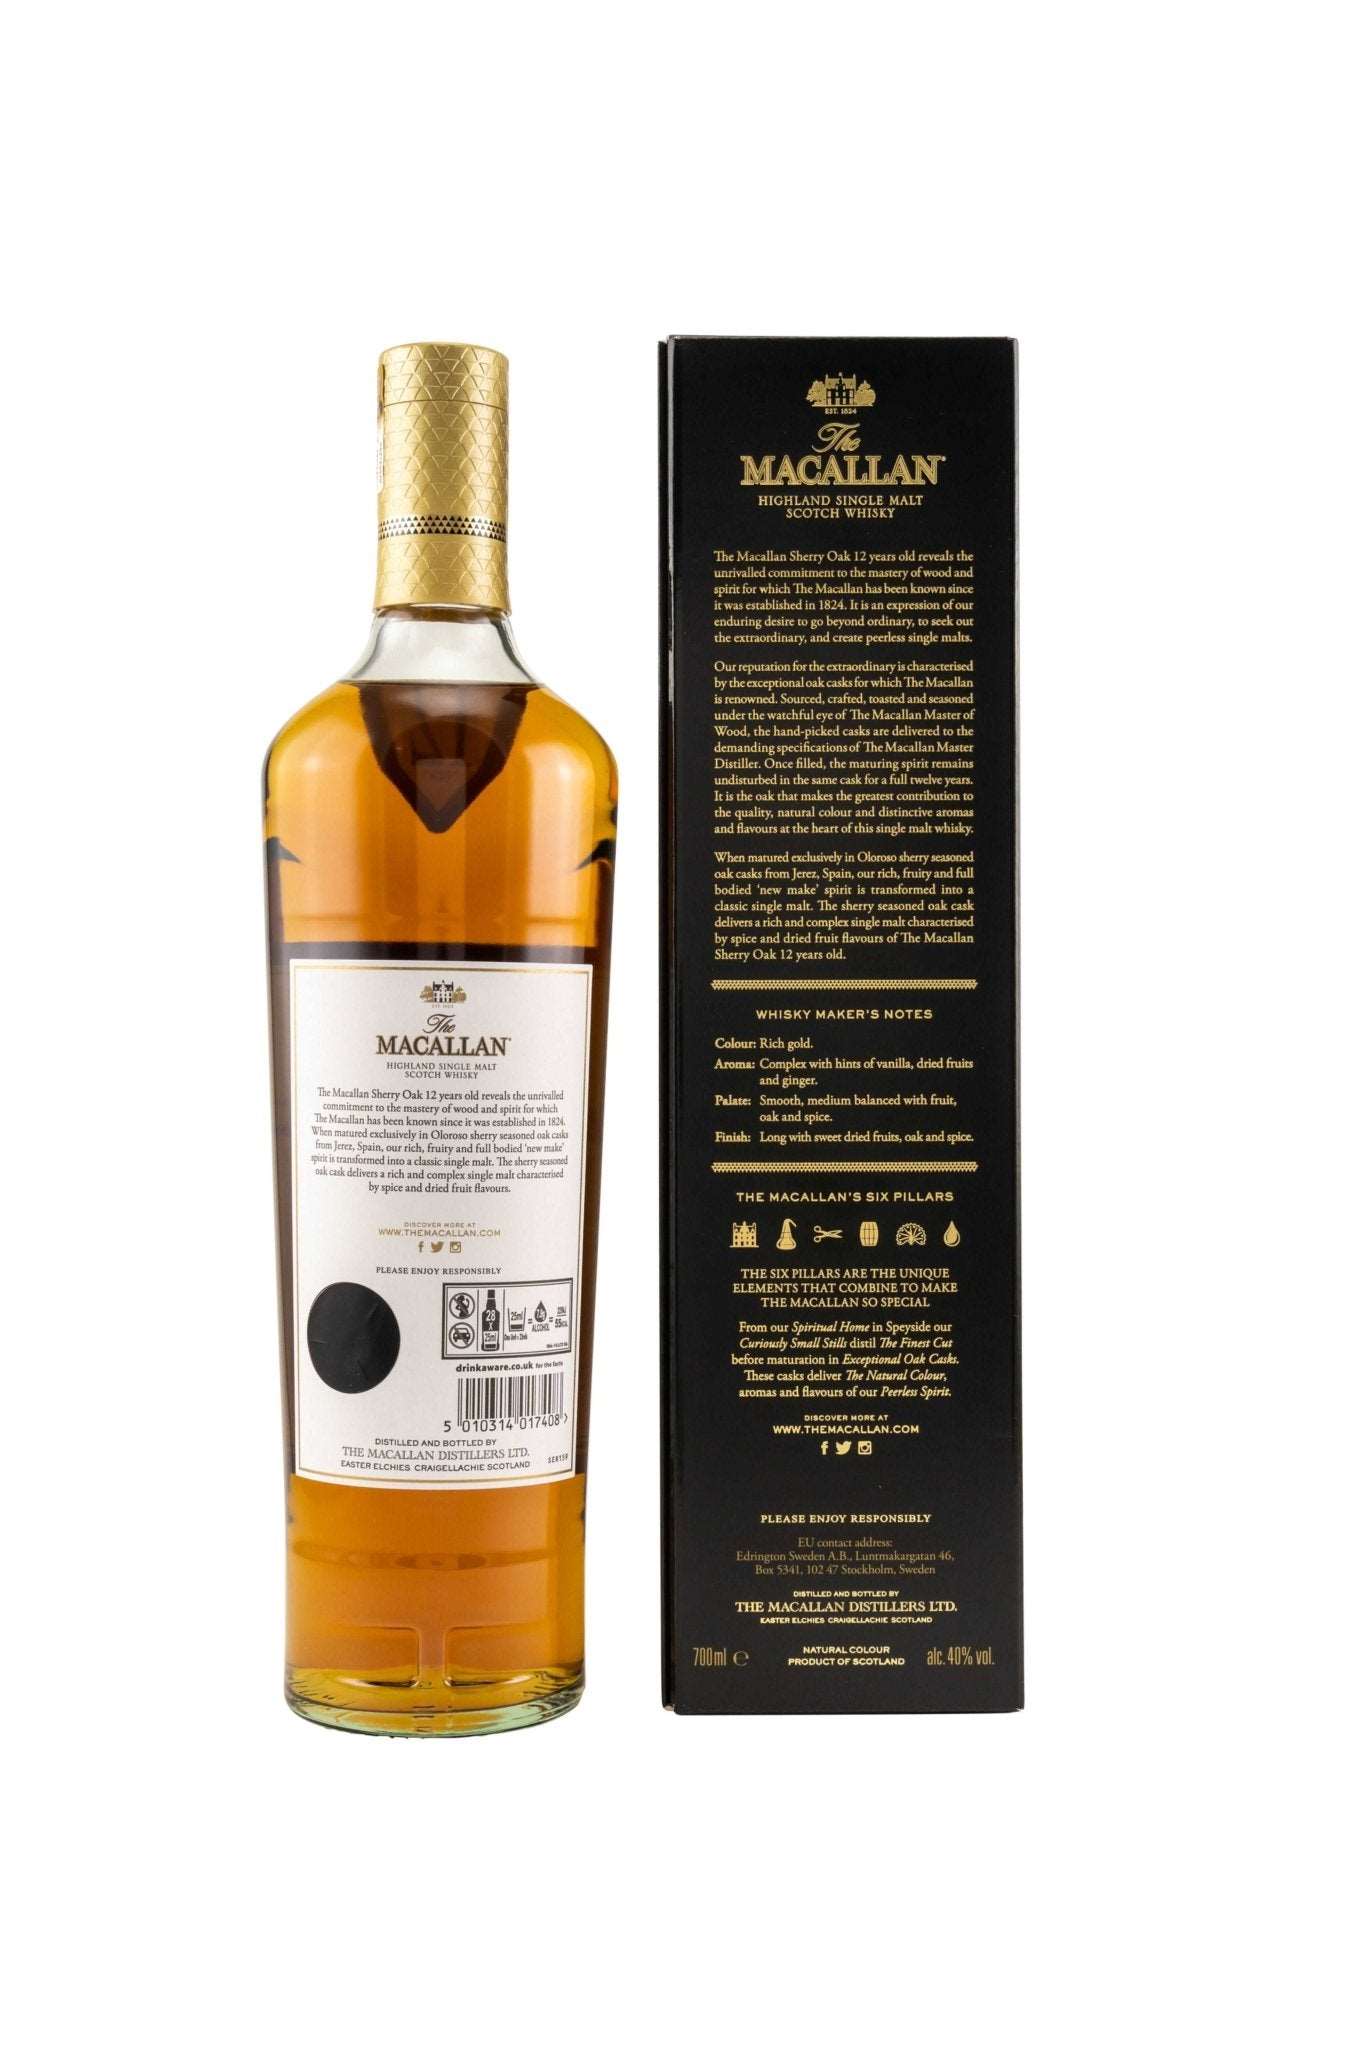 Macallan 12 Jahre Sherry Cask Single Malt Scotch Whisky 40% vol. 700ml - Maltimore